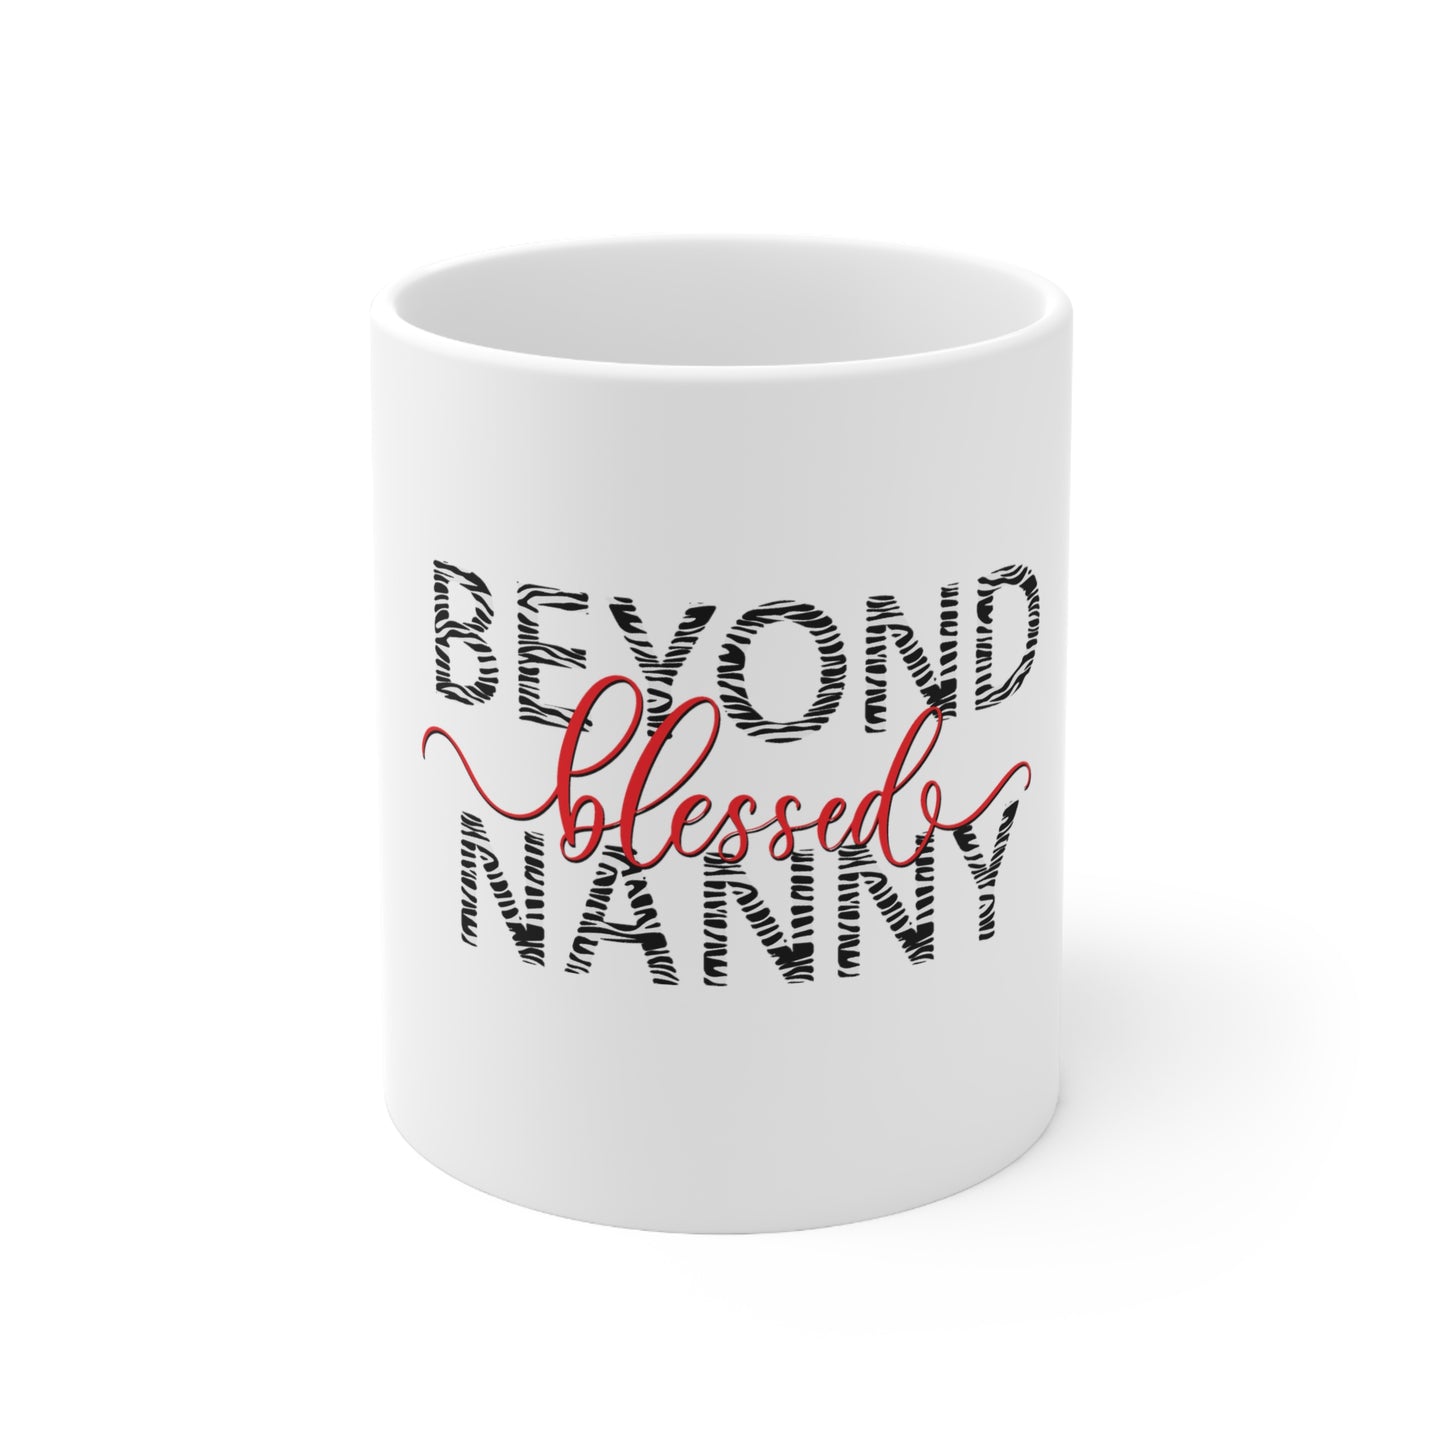 Beyond Blessed Nanny - Ceramic Mug 11oz